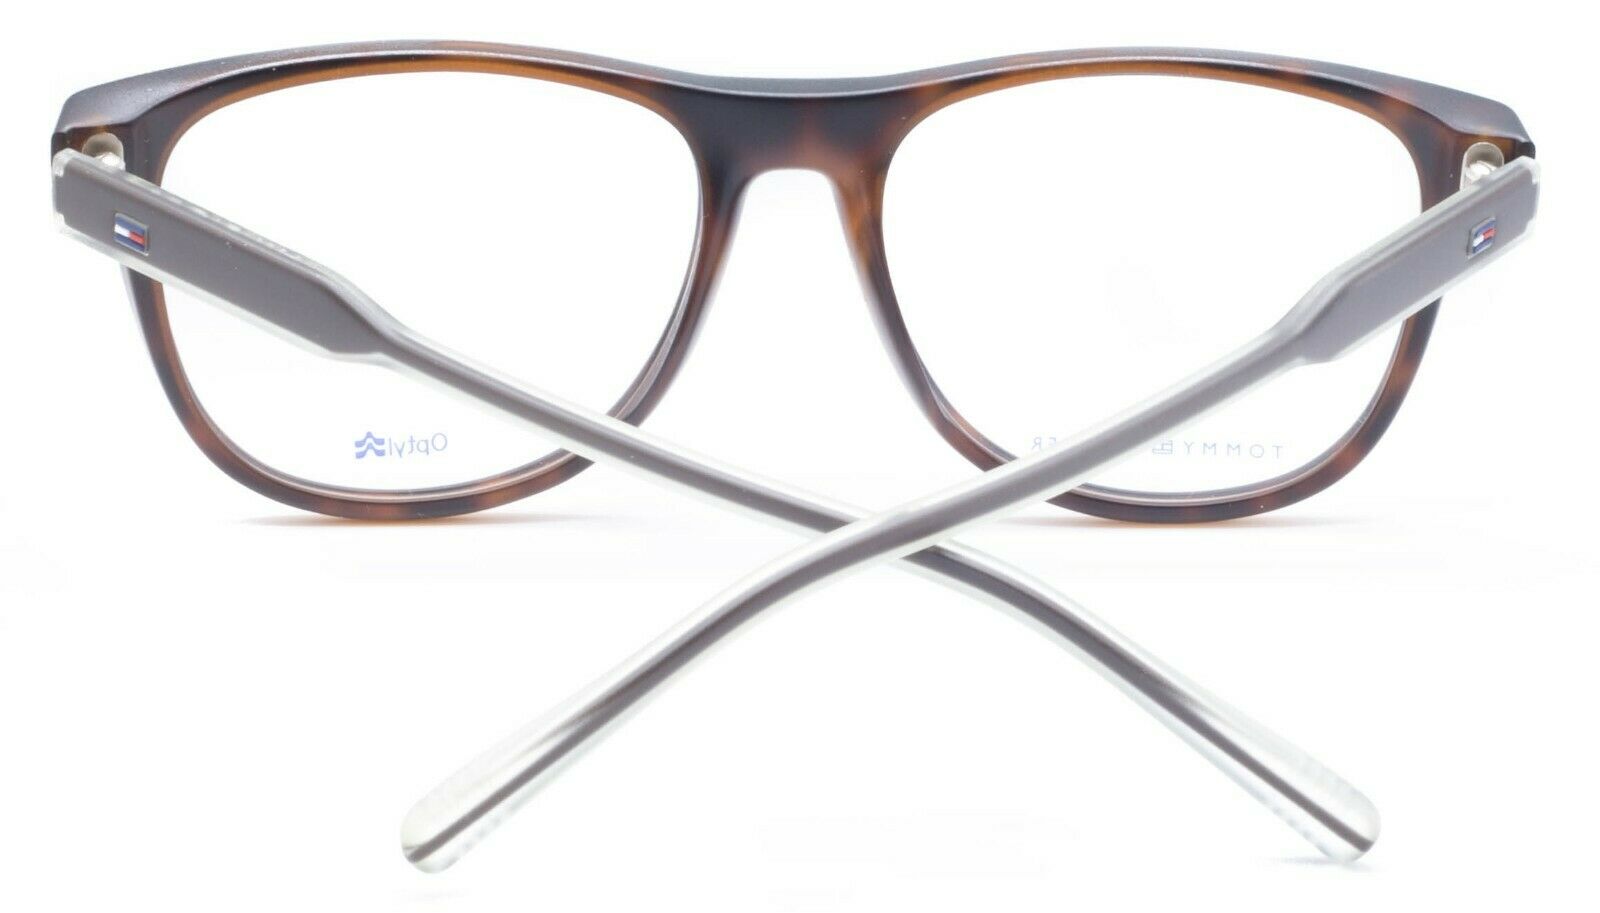 TOMMY HILFIGER TH 1460/F D61 54mm Eyewear FRAMES Glasses RX Optical Eyeglasses